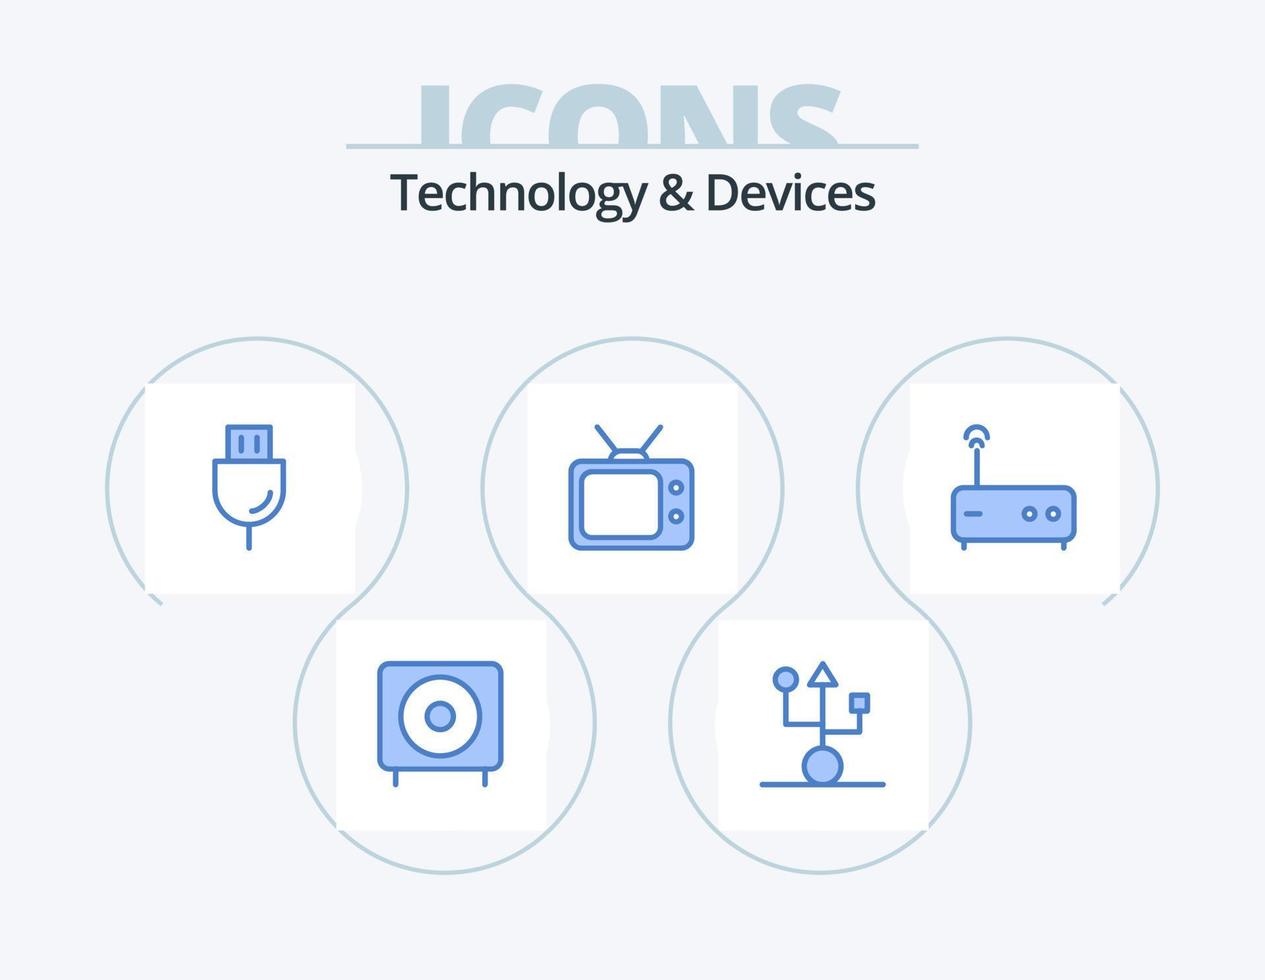 dispositivos blue icon pack 5 diseño de iconos. mirar. televisión. hardware. tecnología. enchufar vector